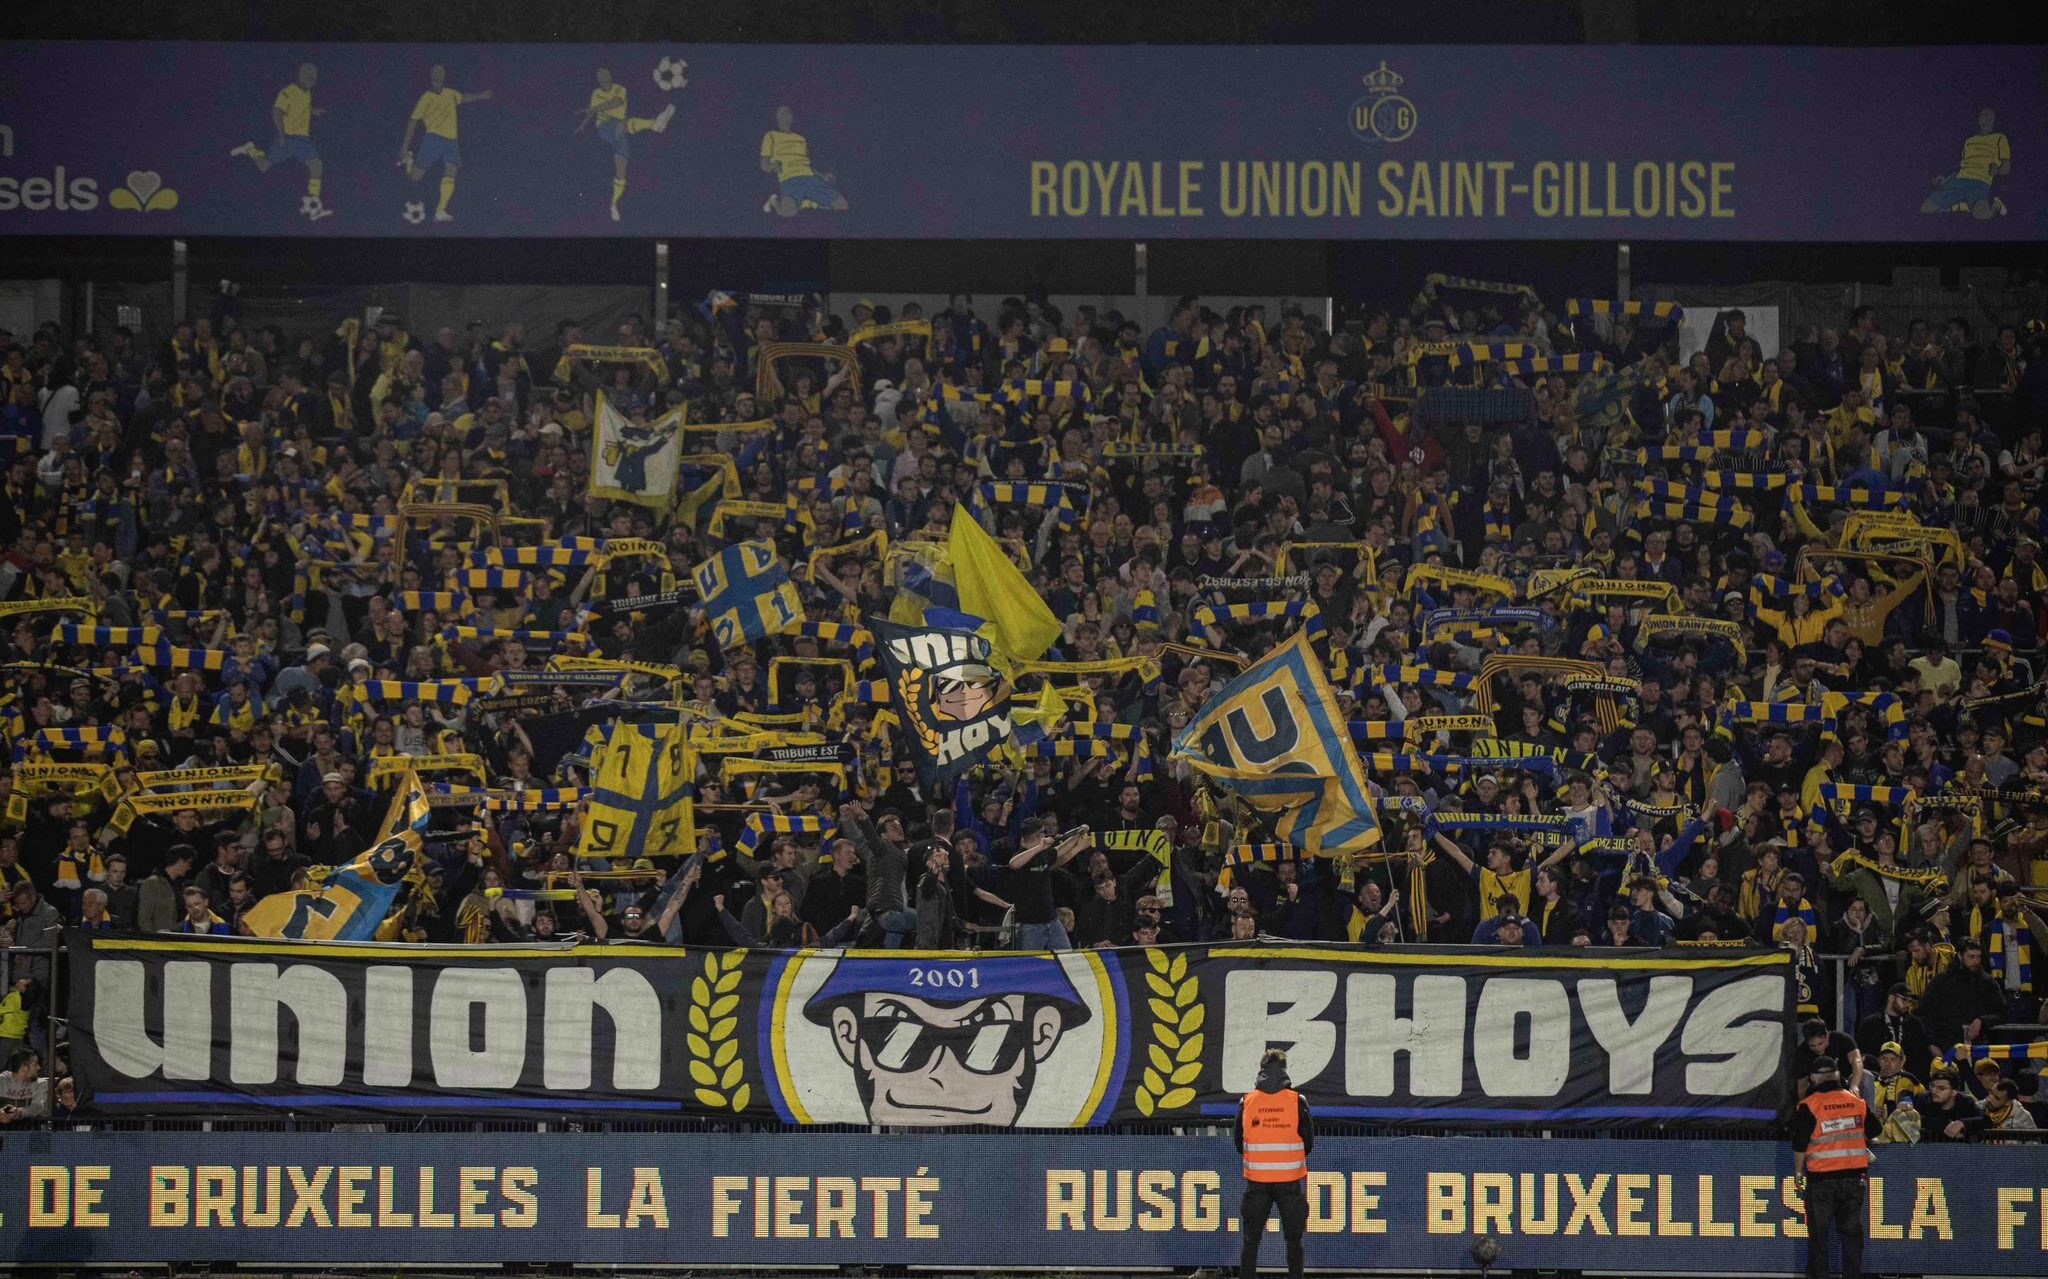 Union Saint-Gilloise supporters